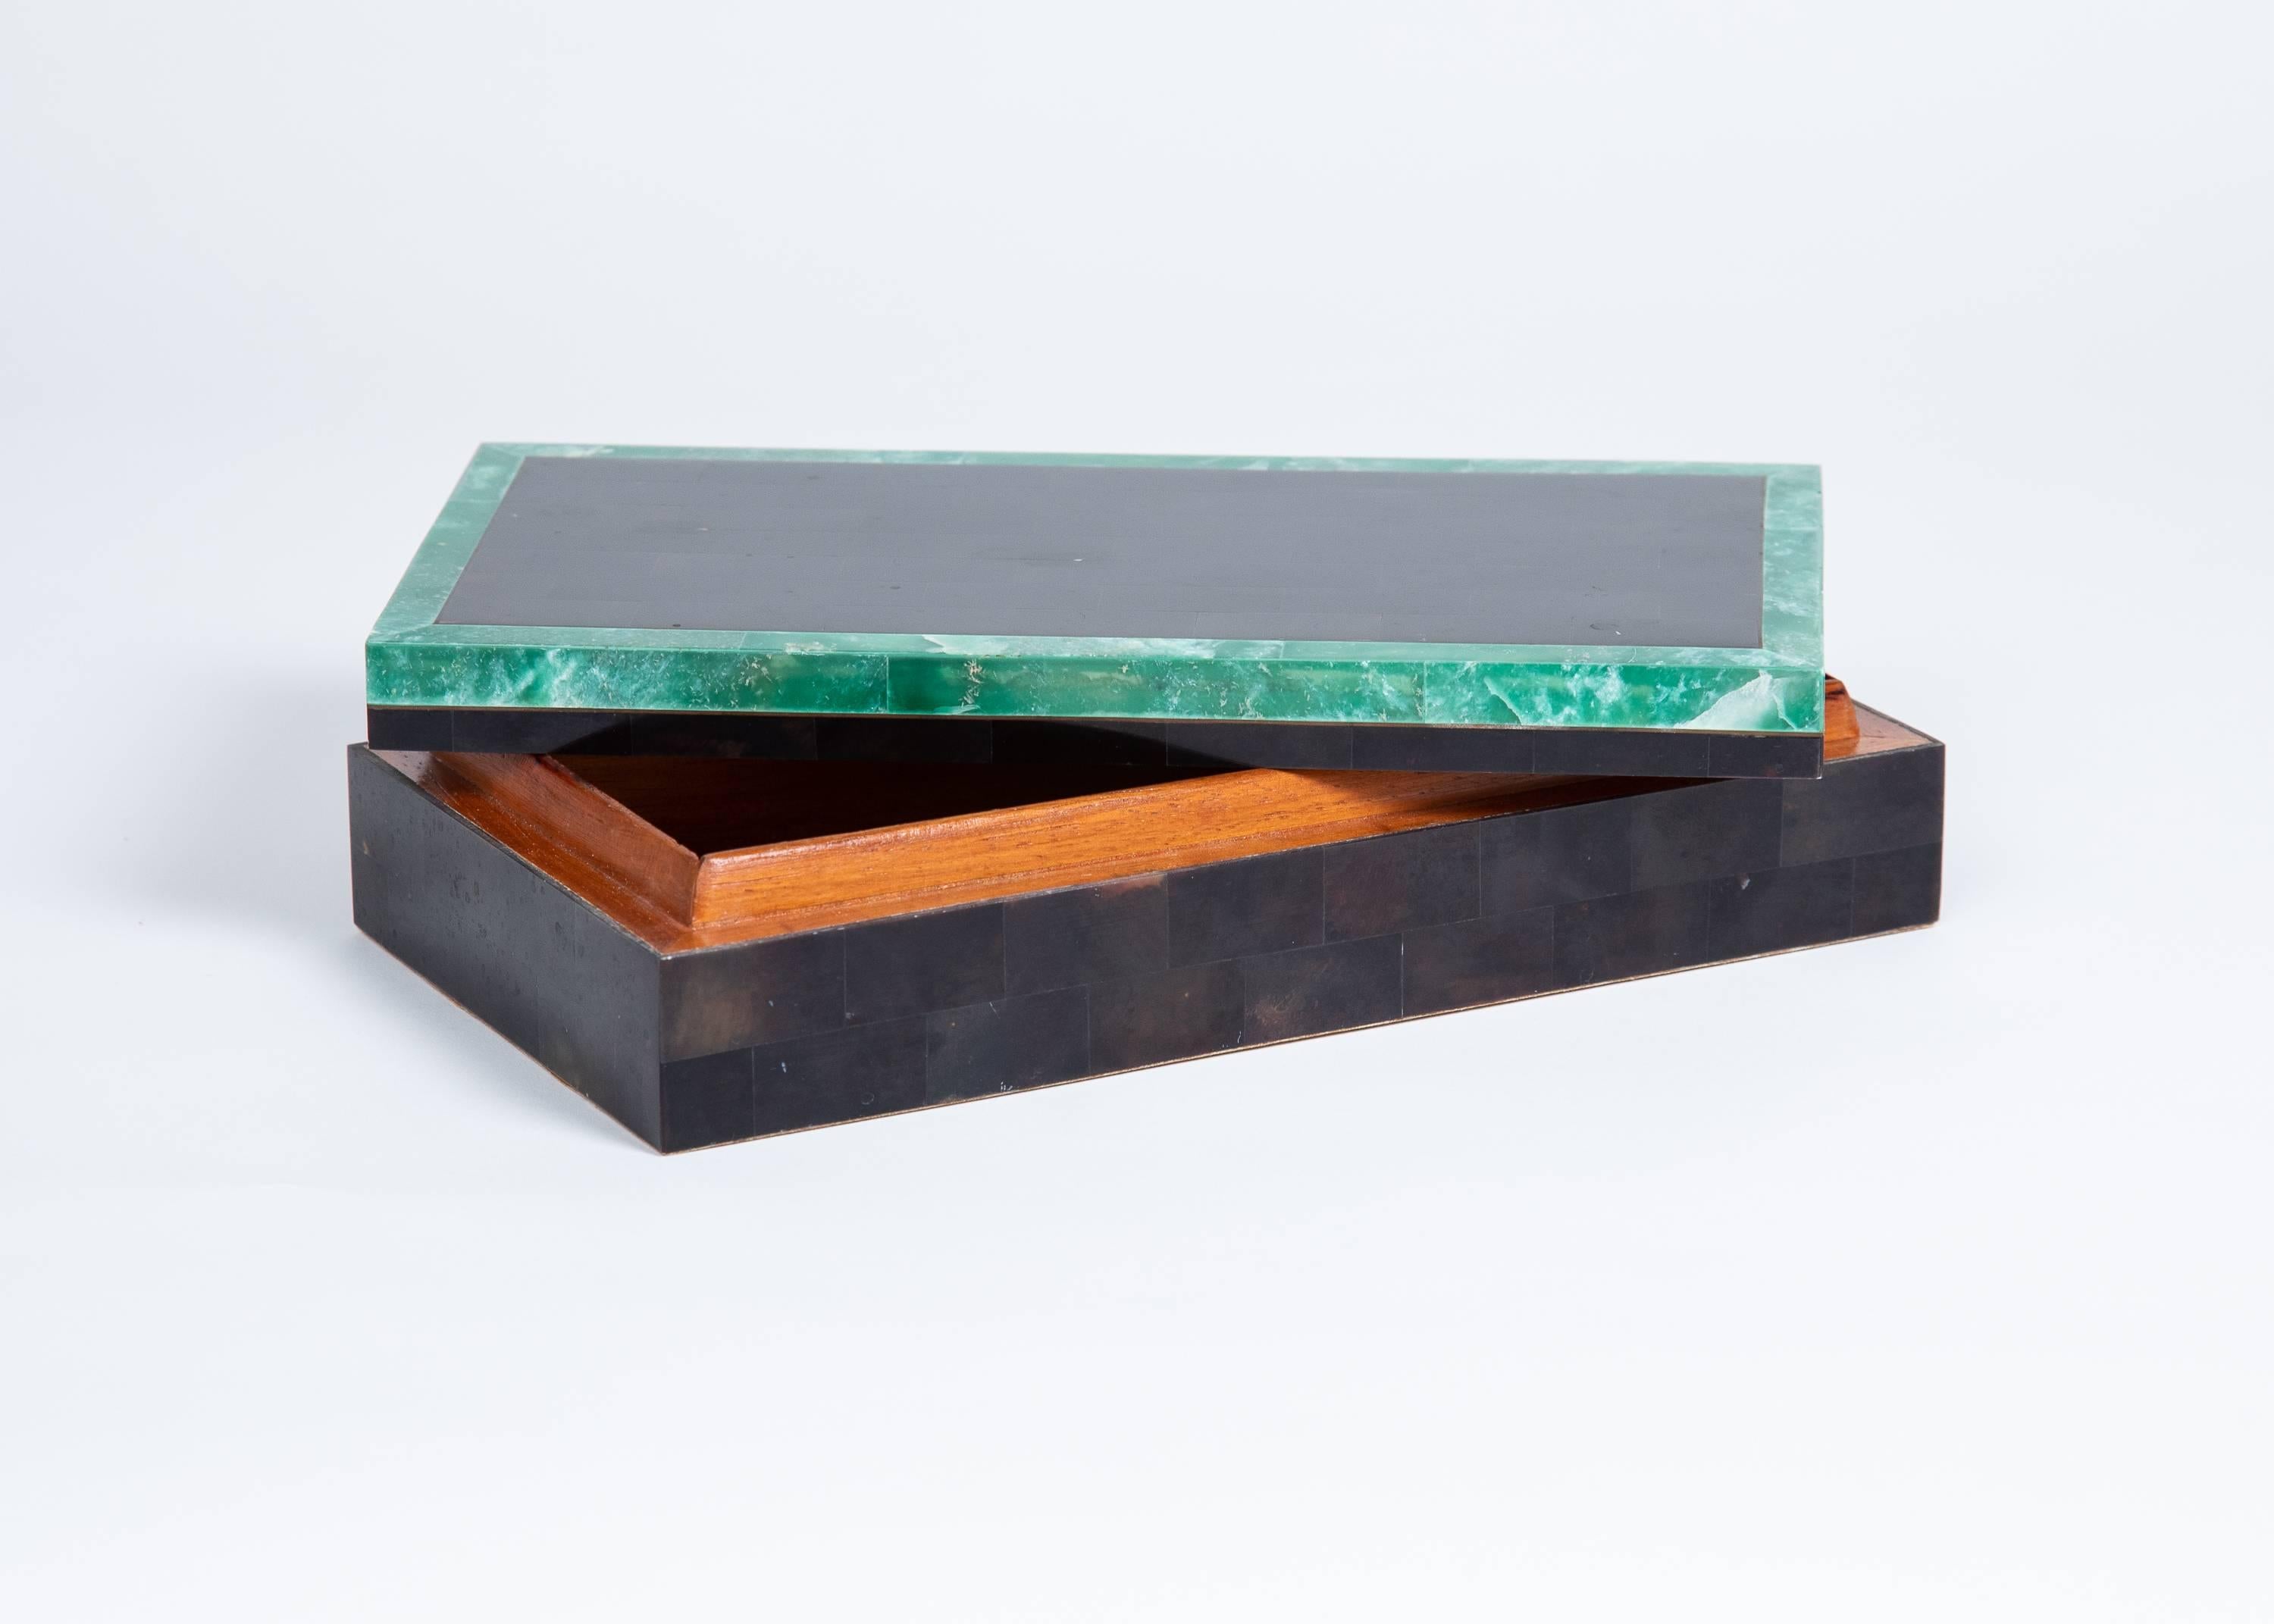 Tessellated horn box with green stone border on top. Mahogany lined interior and felt bottom. Maitland Smith, 1980s.